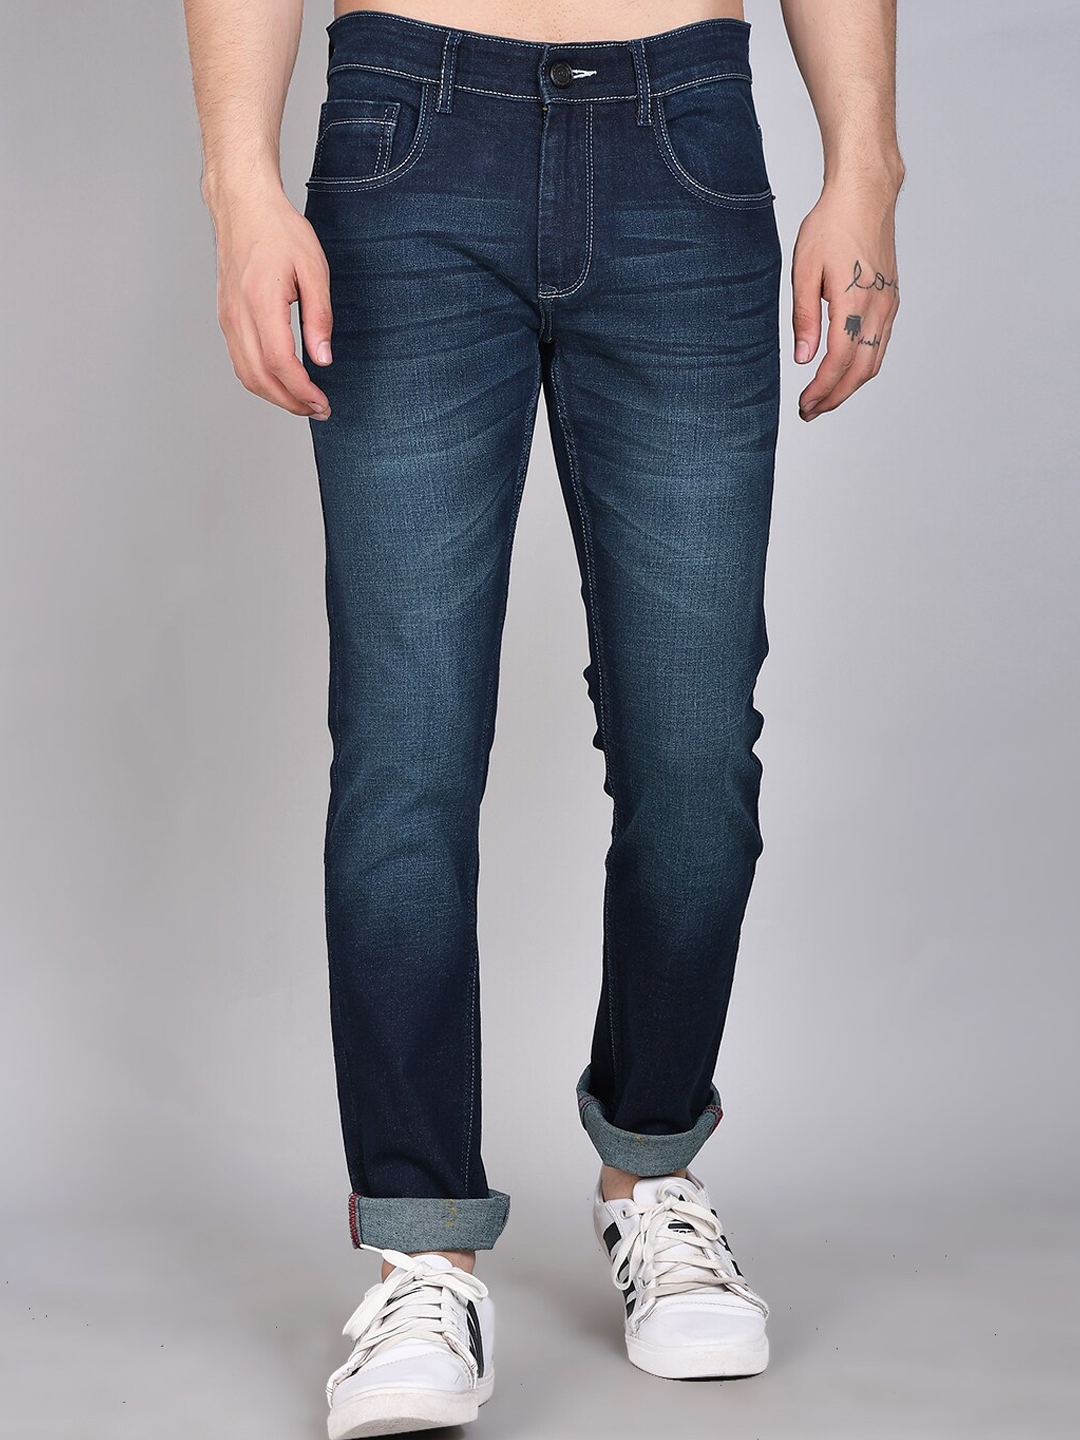 Buy PEPLOS Men Blue Comfort Slim Fit Light Fade Stretchable Jeans ...